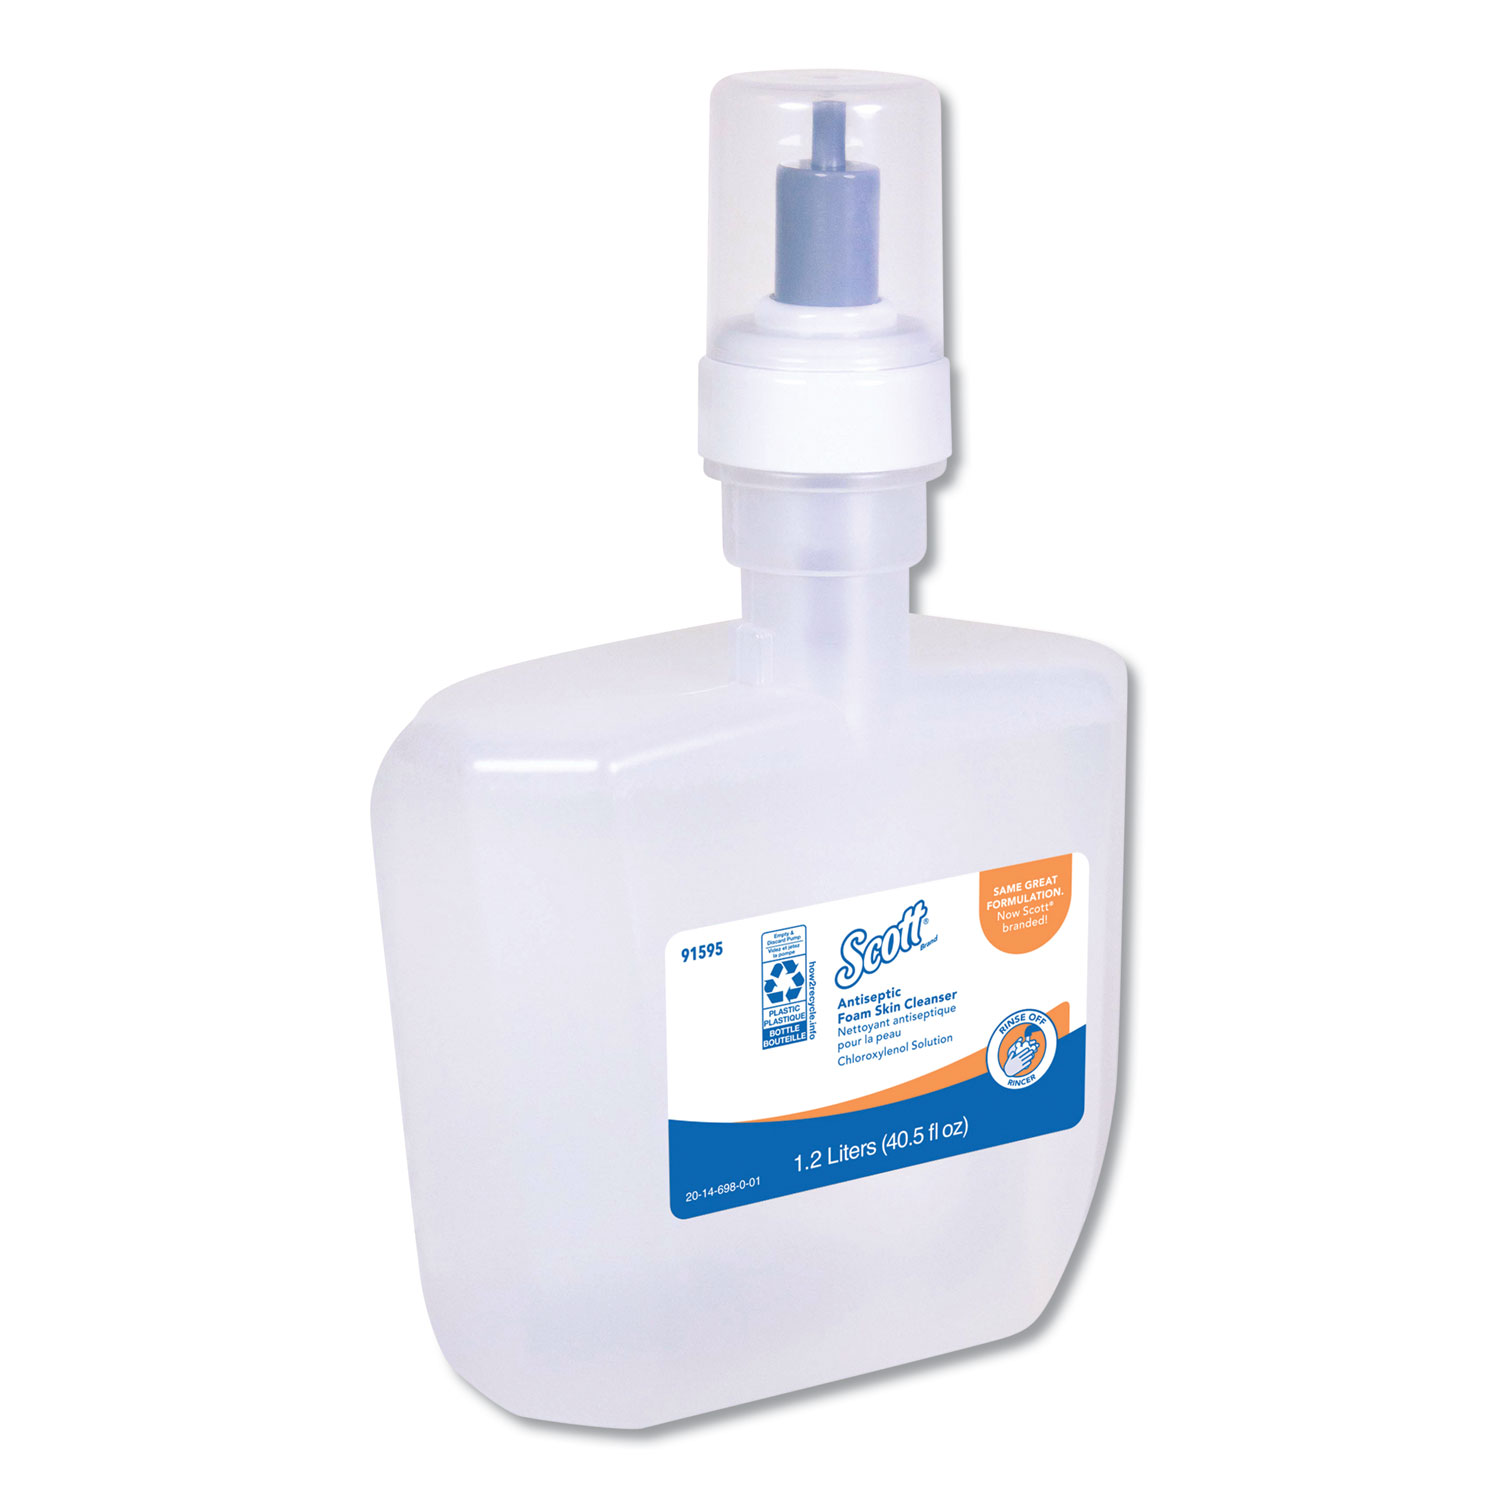  Scott 91595 Control Antiseptic Foam Skin Cleanser, Unscented, 1200 mL Refill (KCC91595) 